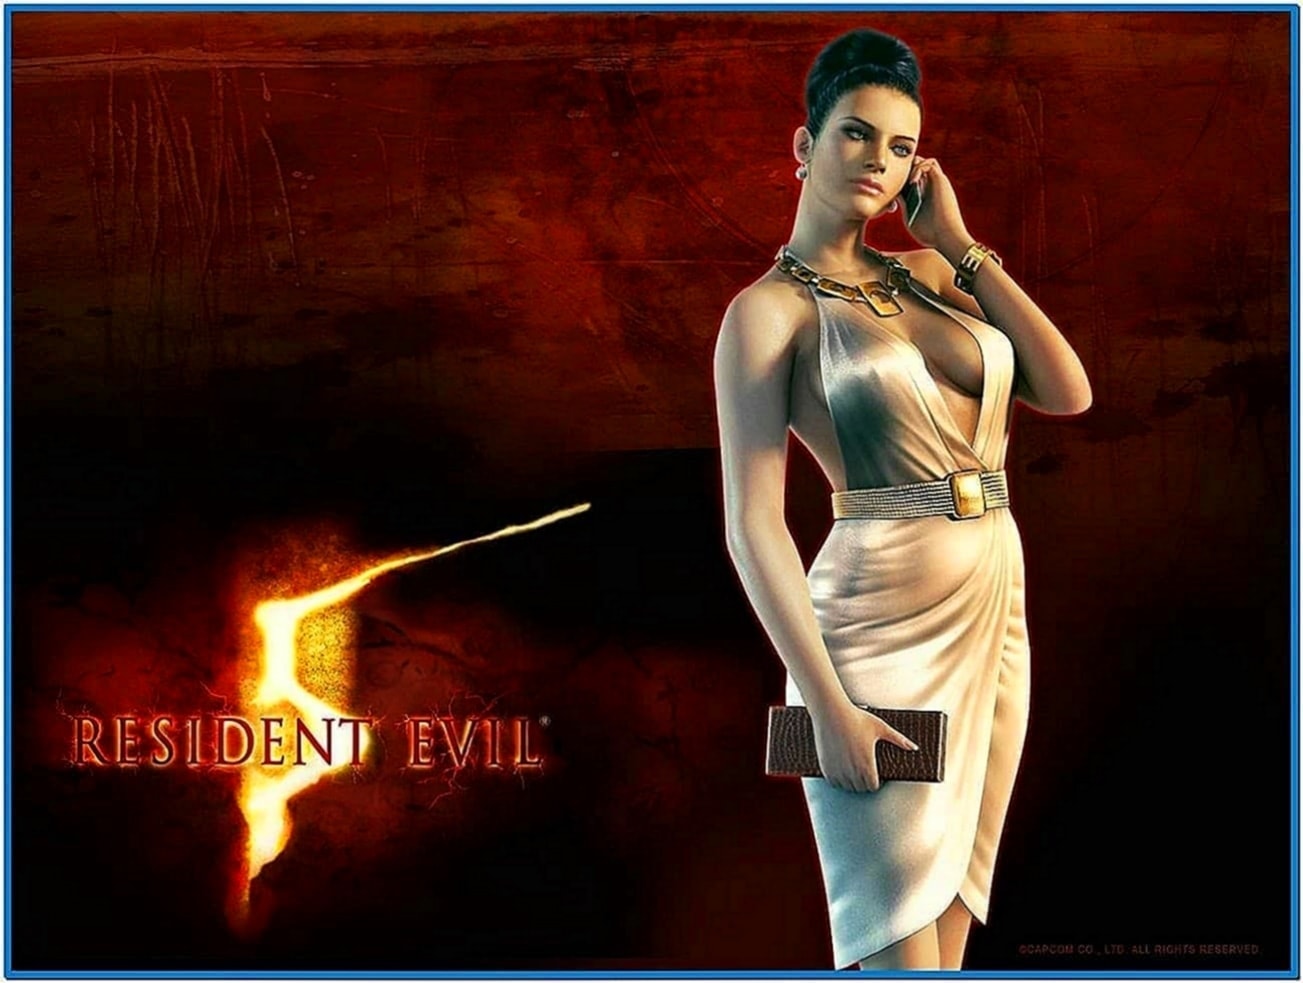 Resident evil 5 mac download free